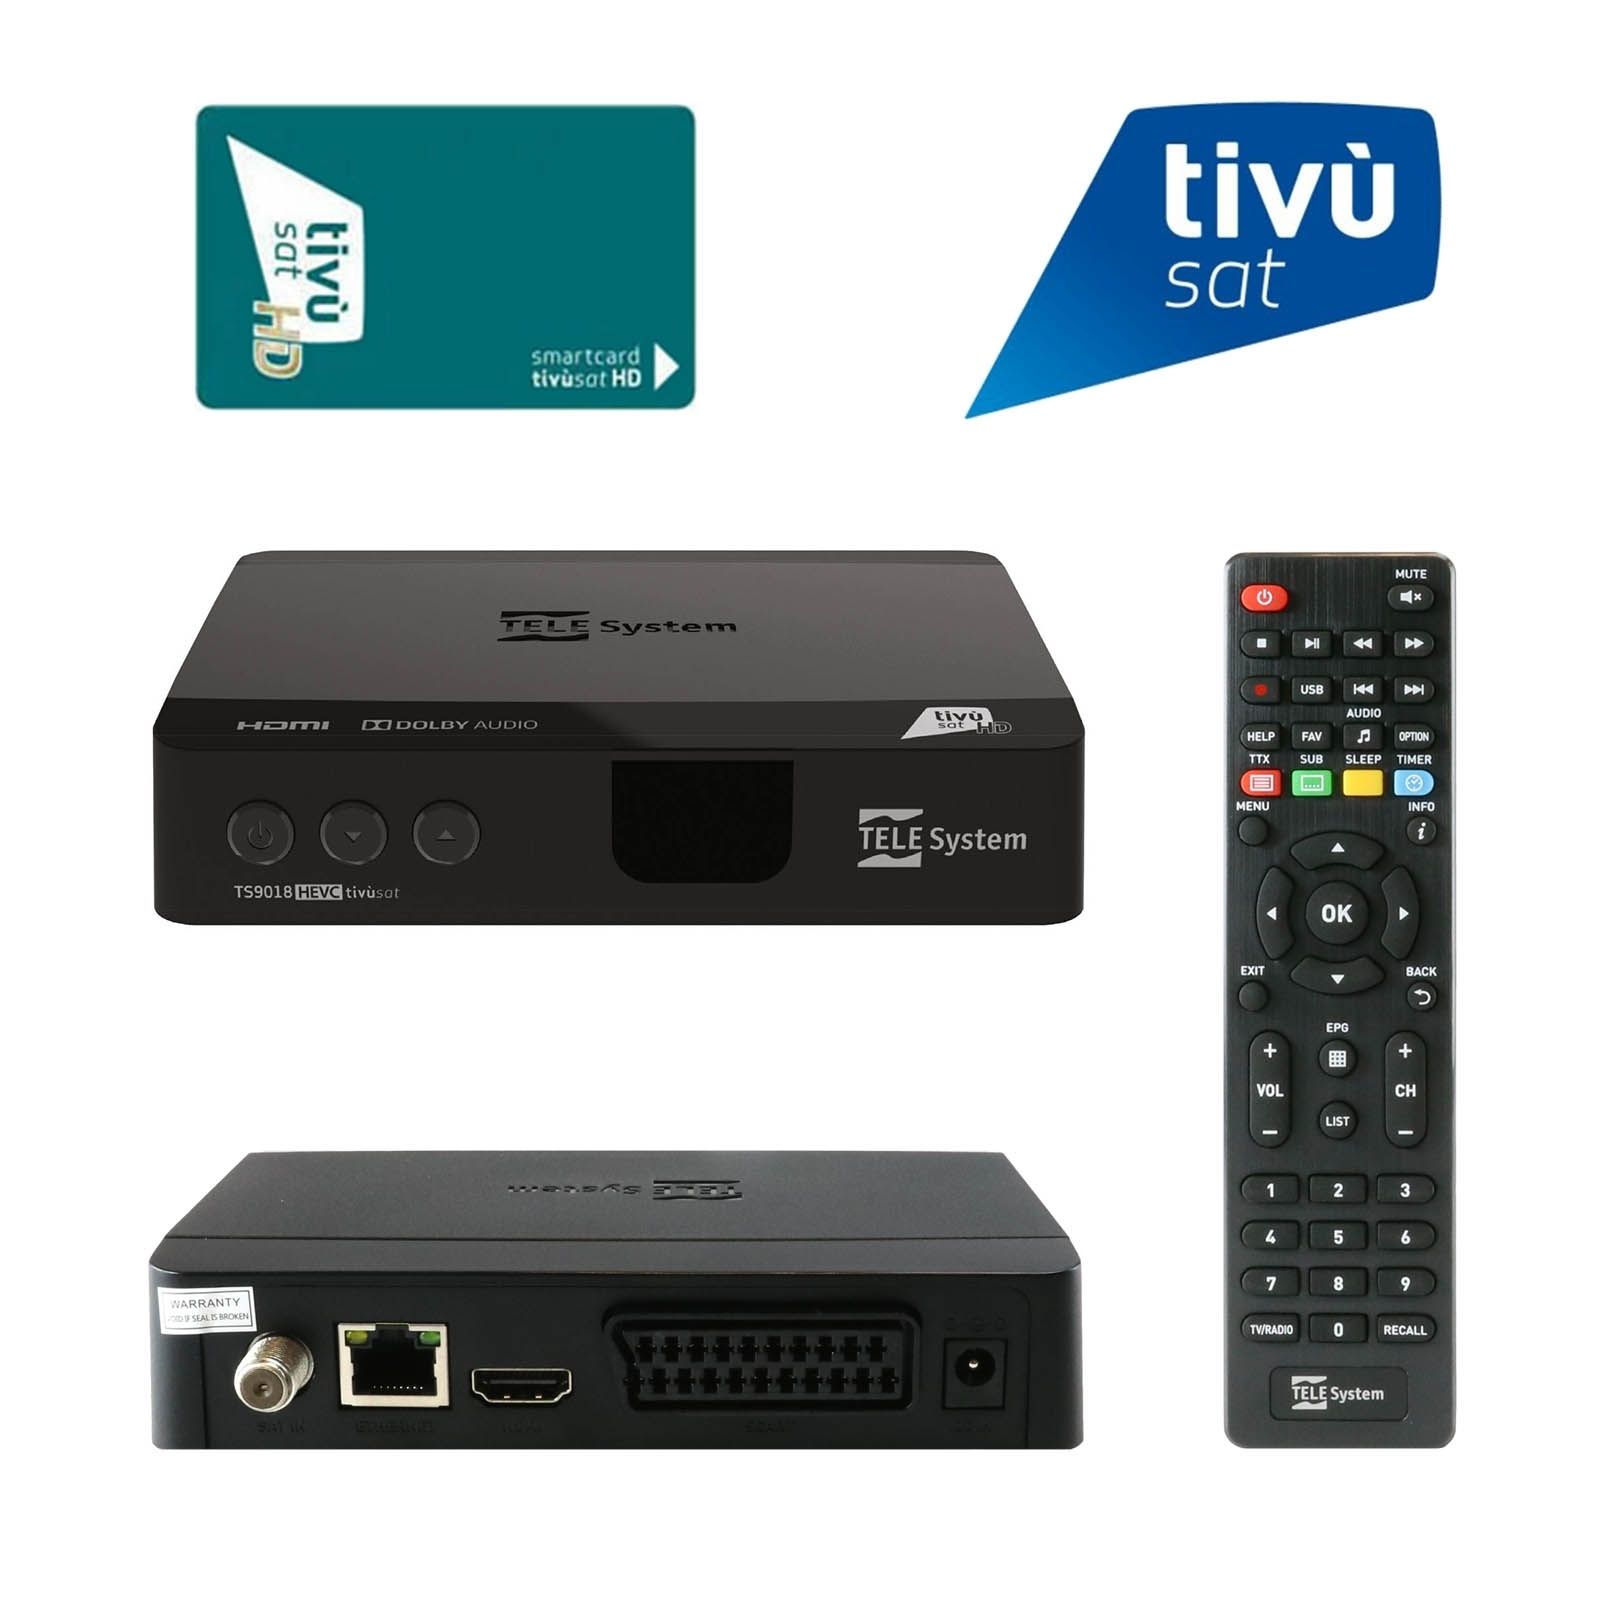 Telesystem TS9018 Full HD HEVC H.265 Smartcard HDMI DVB-S2 Sat Receiver mit aktiver Tivusat HD Karte von Telesystem